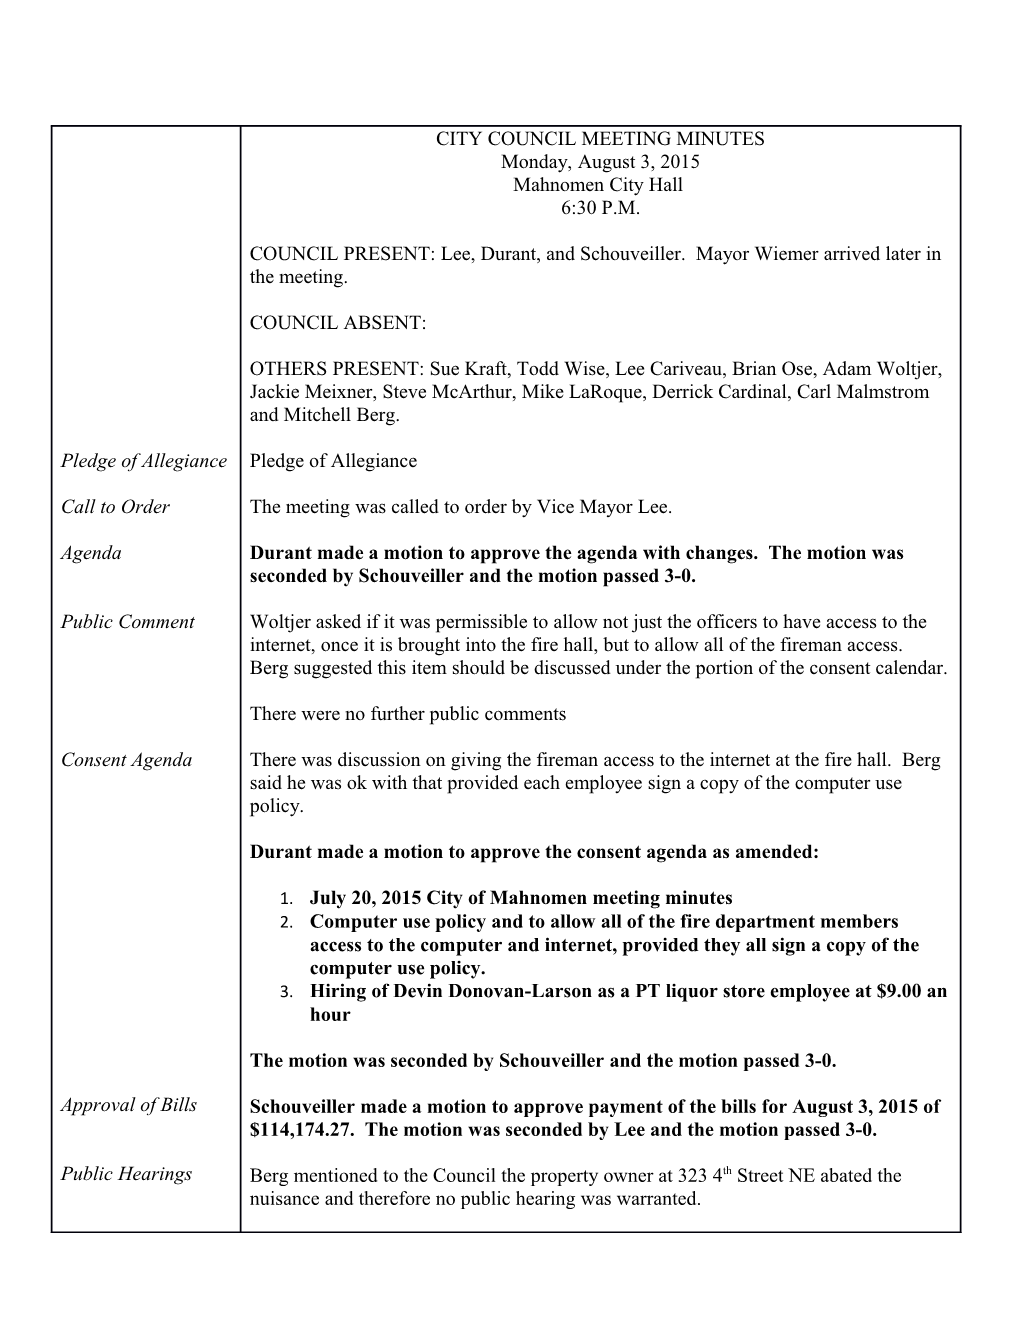 July 20, 2015 City of Mahnomen Meeting Minutes